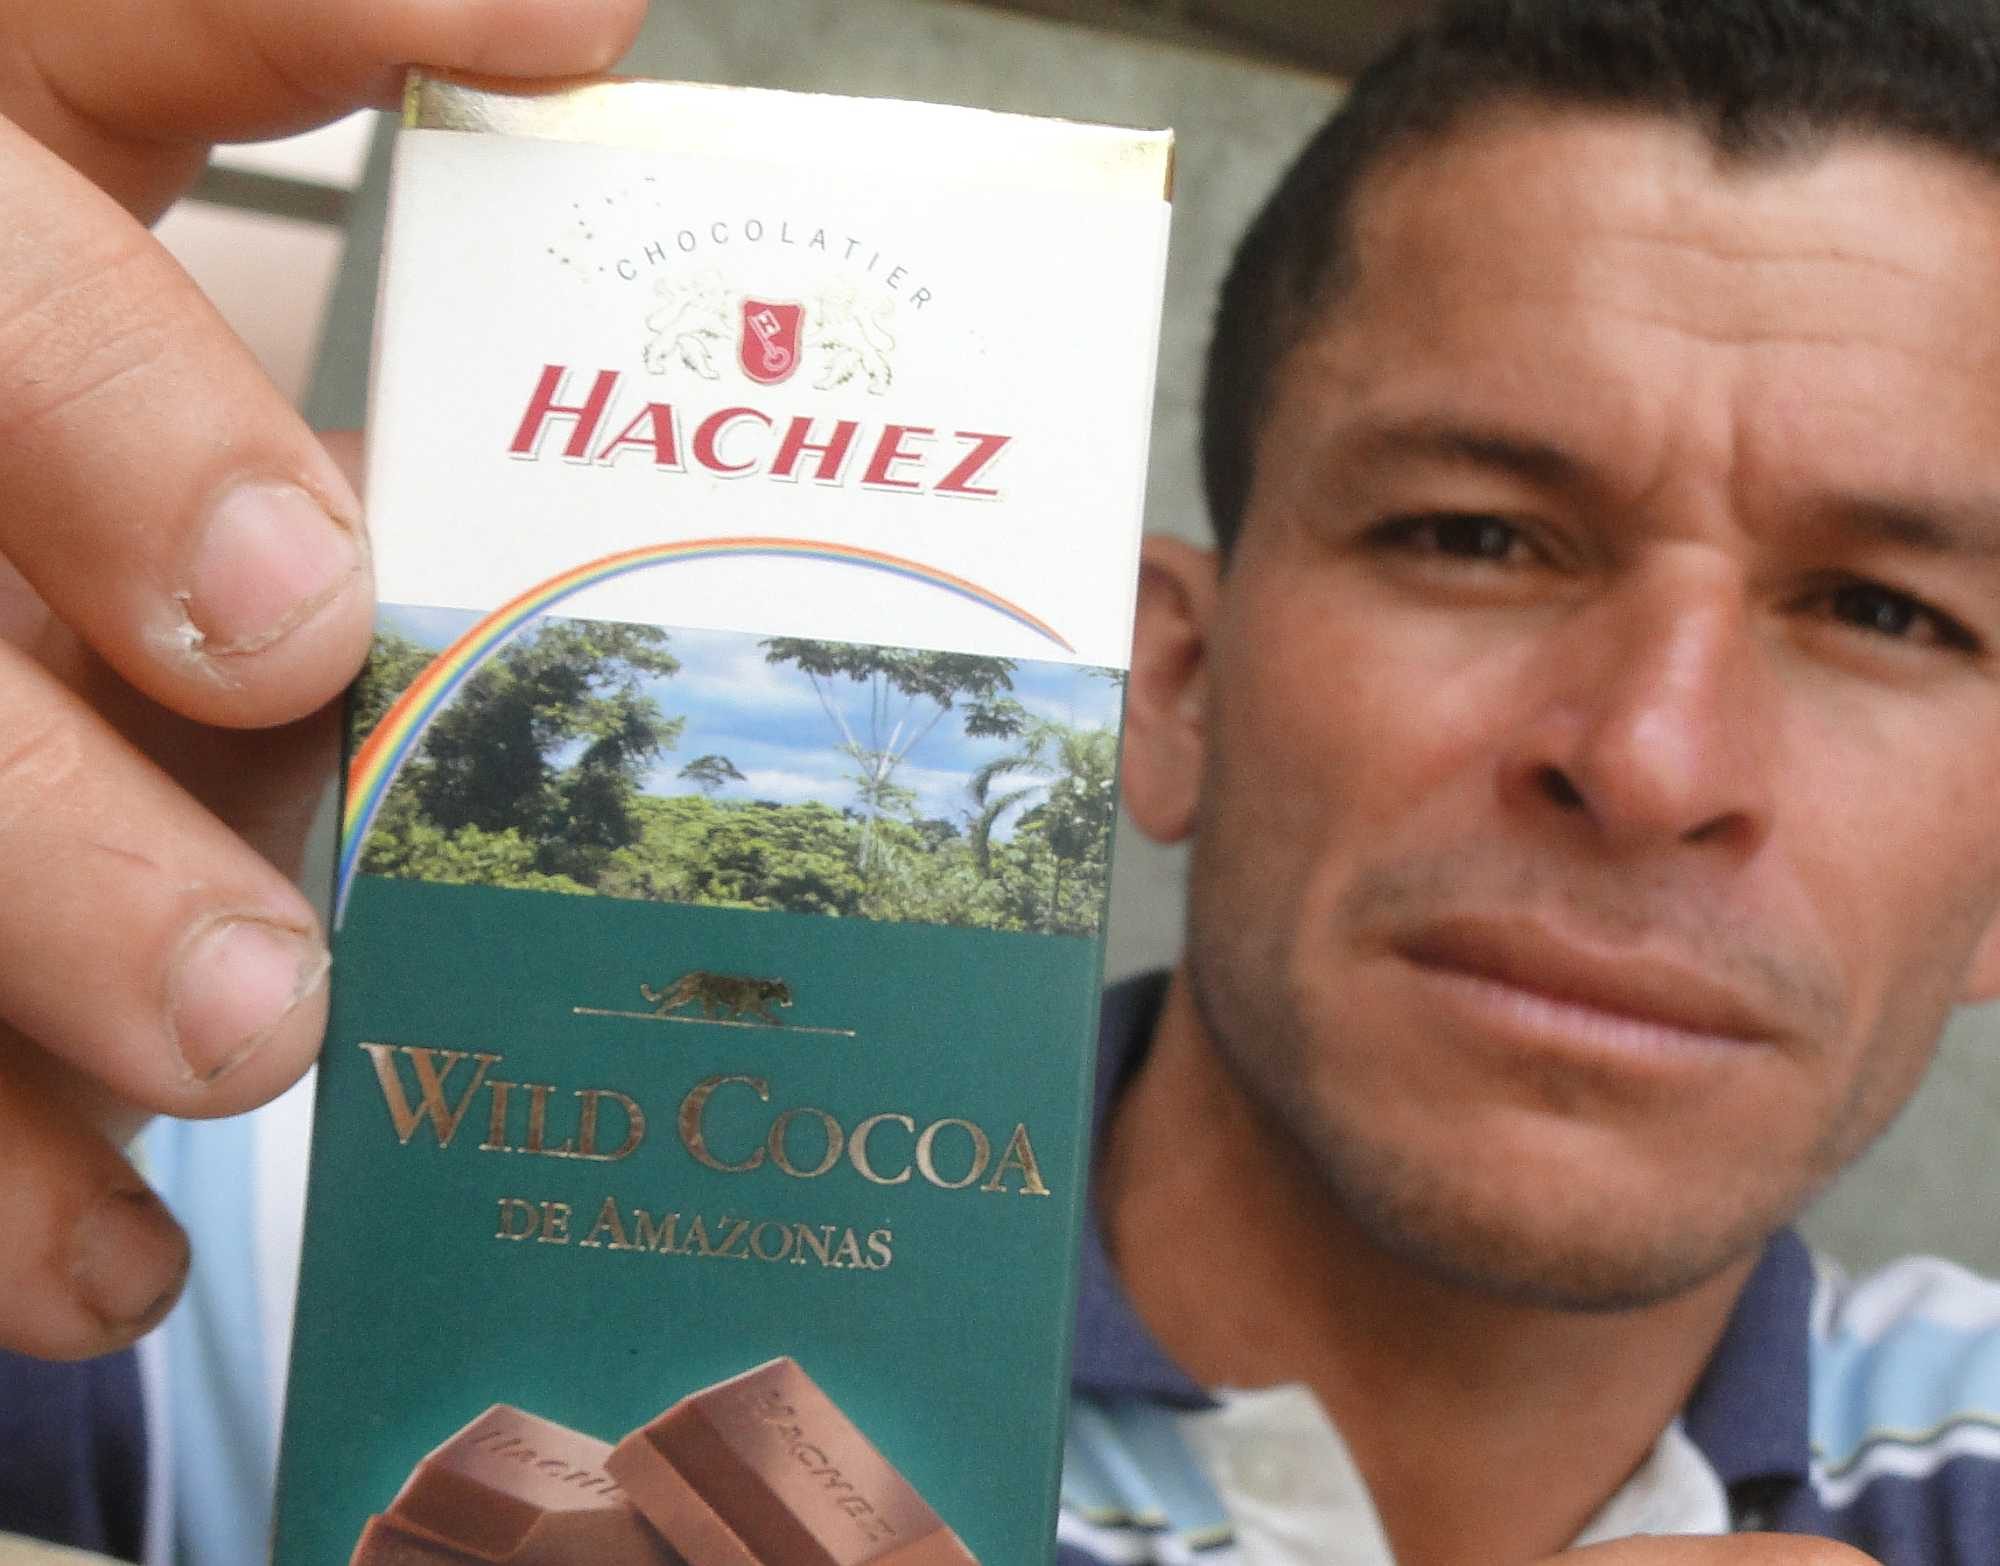 Franciênio da Silva shows chocolate made in Germany with cocoa from Arapixi - Photo: Jorge Eduardo Dantas